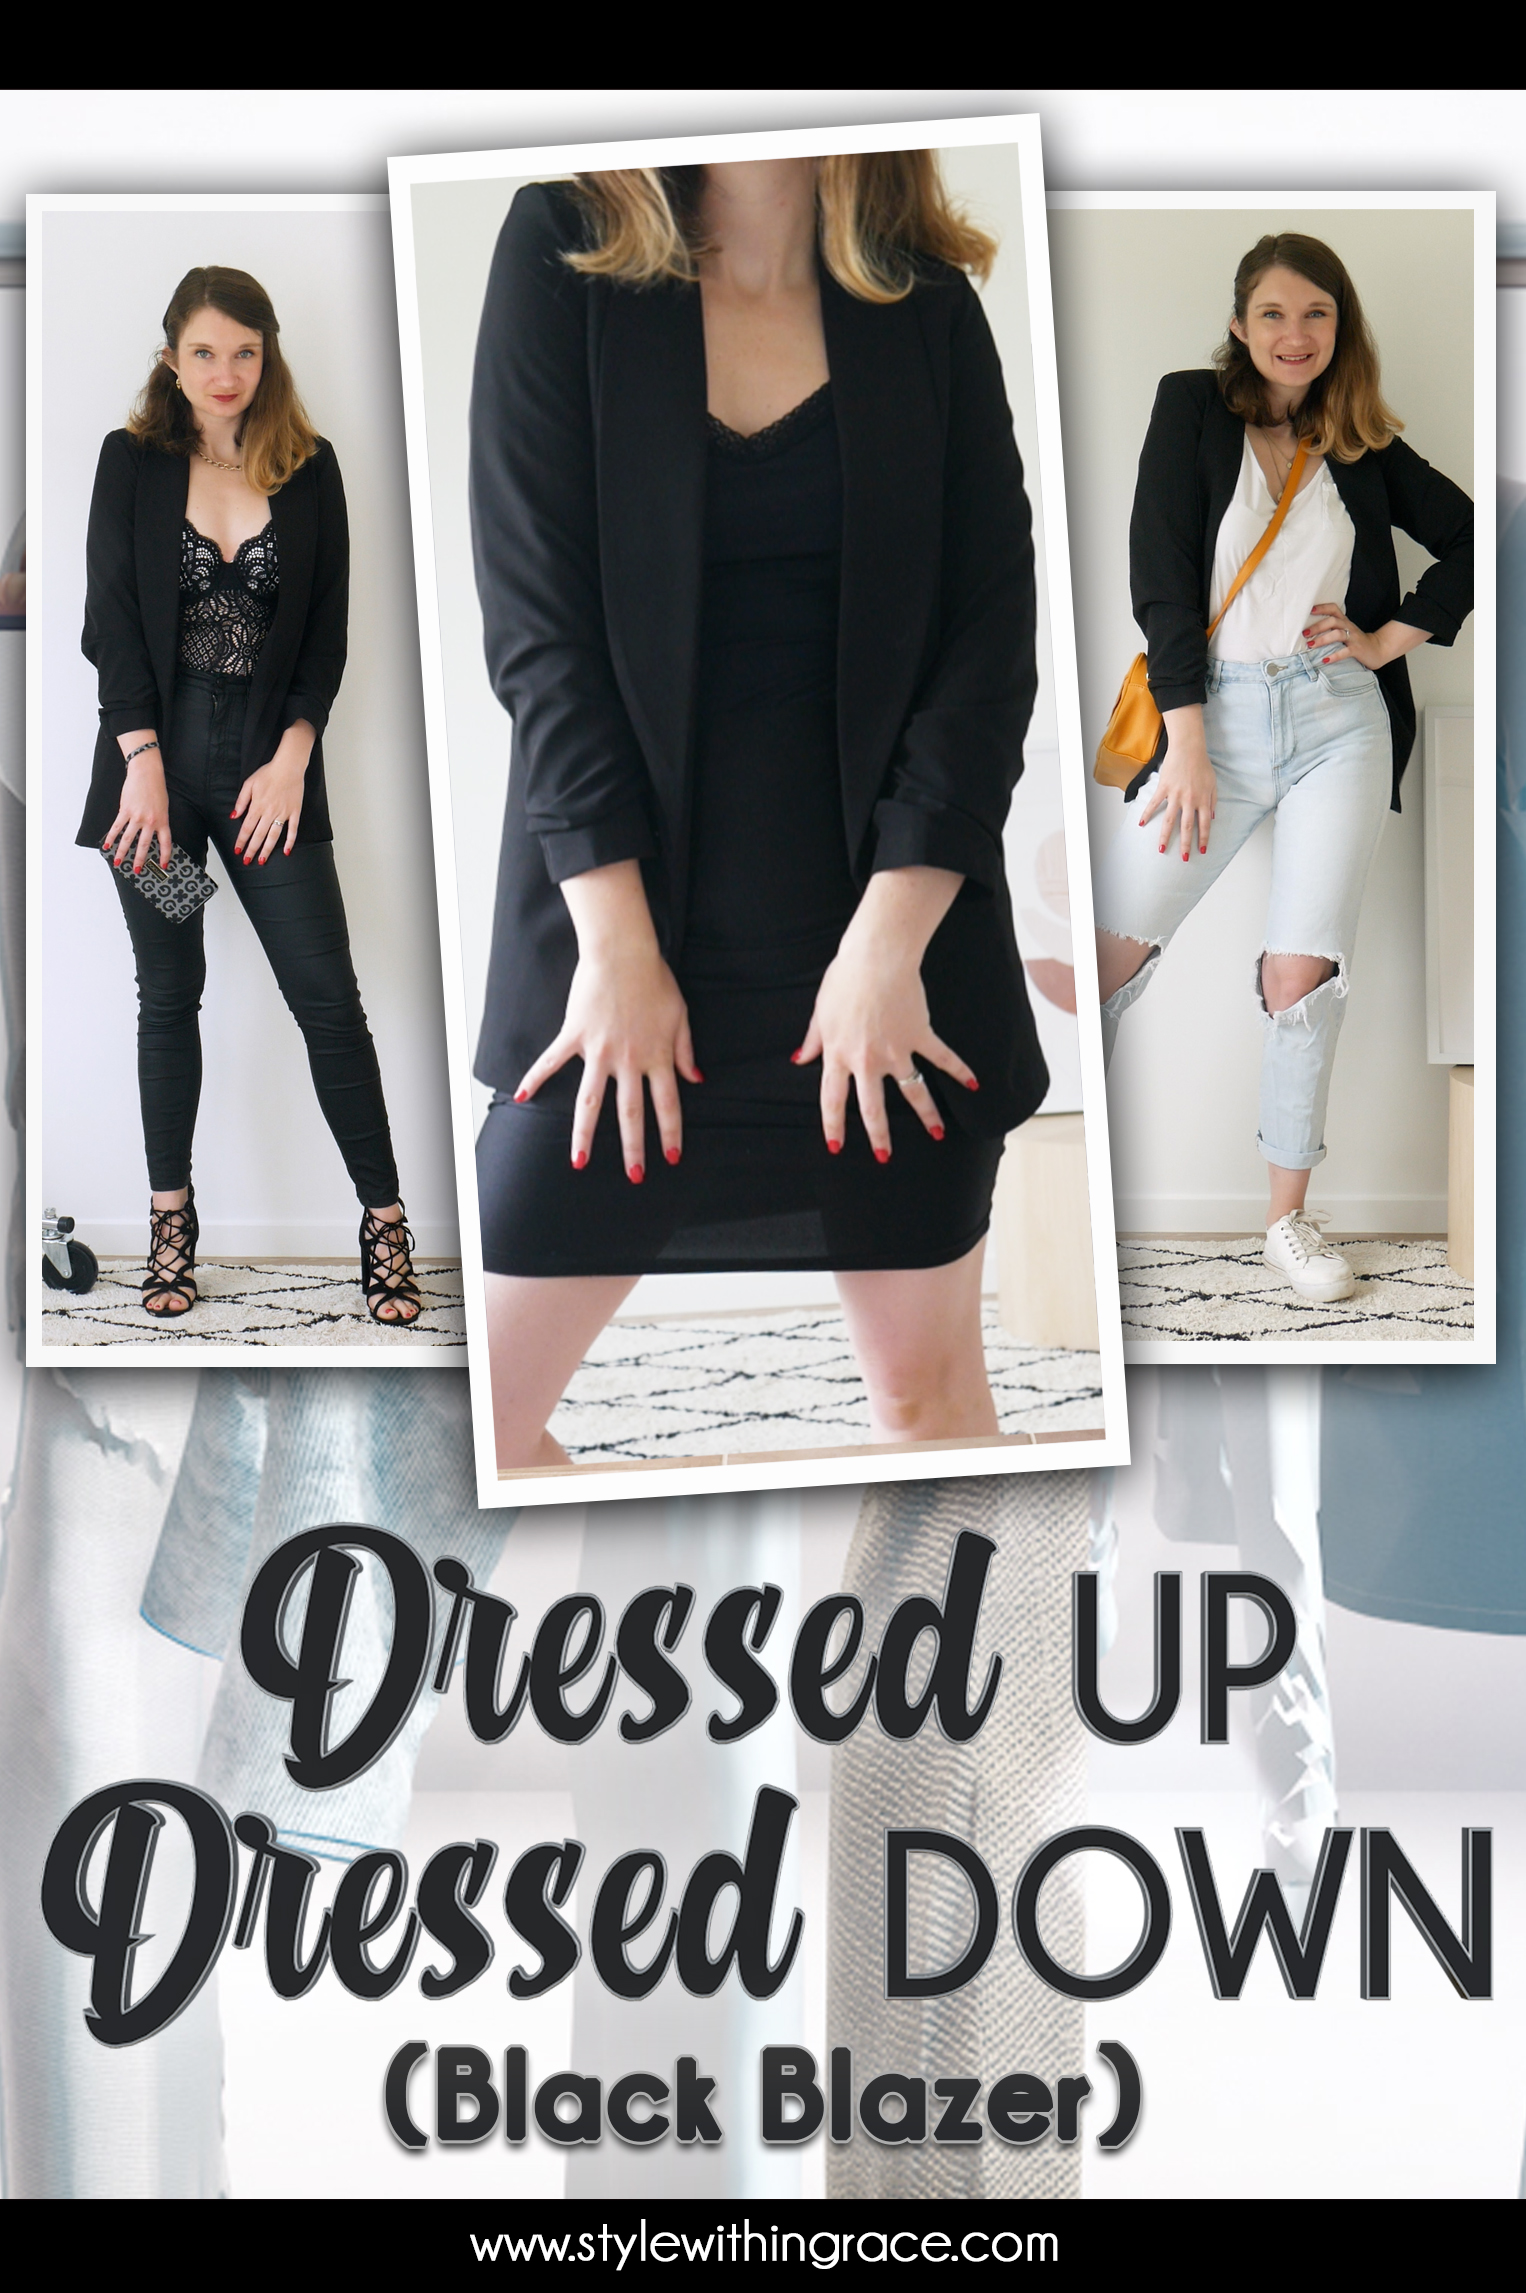 Dressed Up Dressed Down (Black Blazer) Pinterest